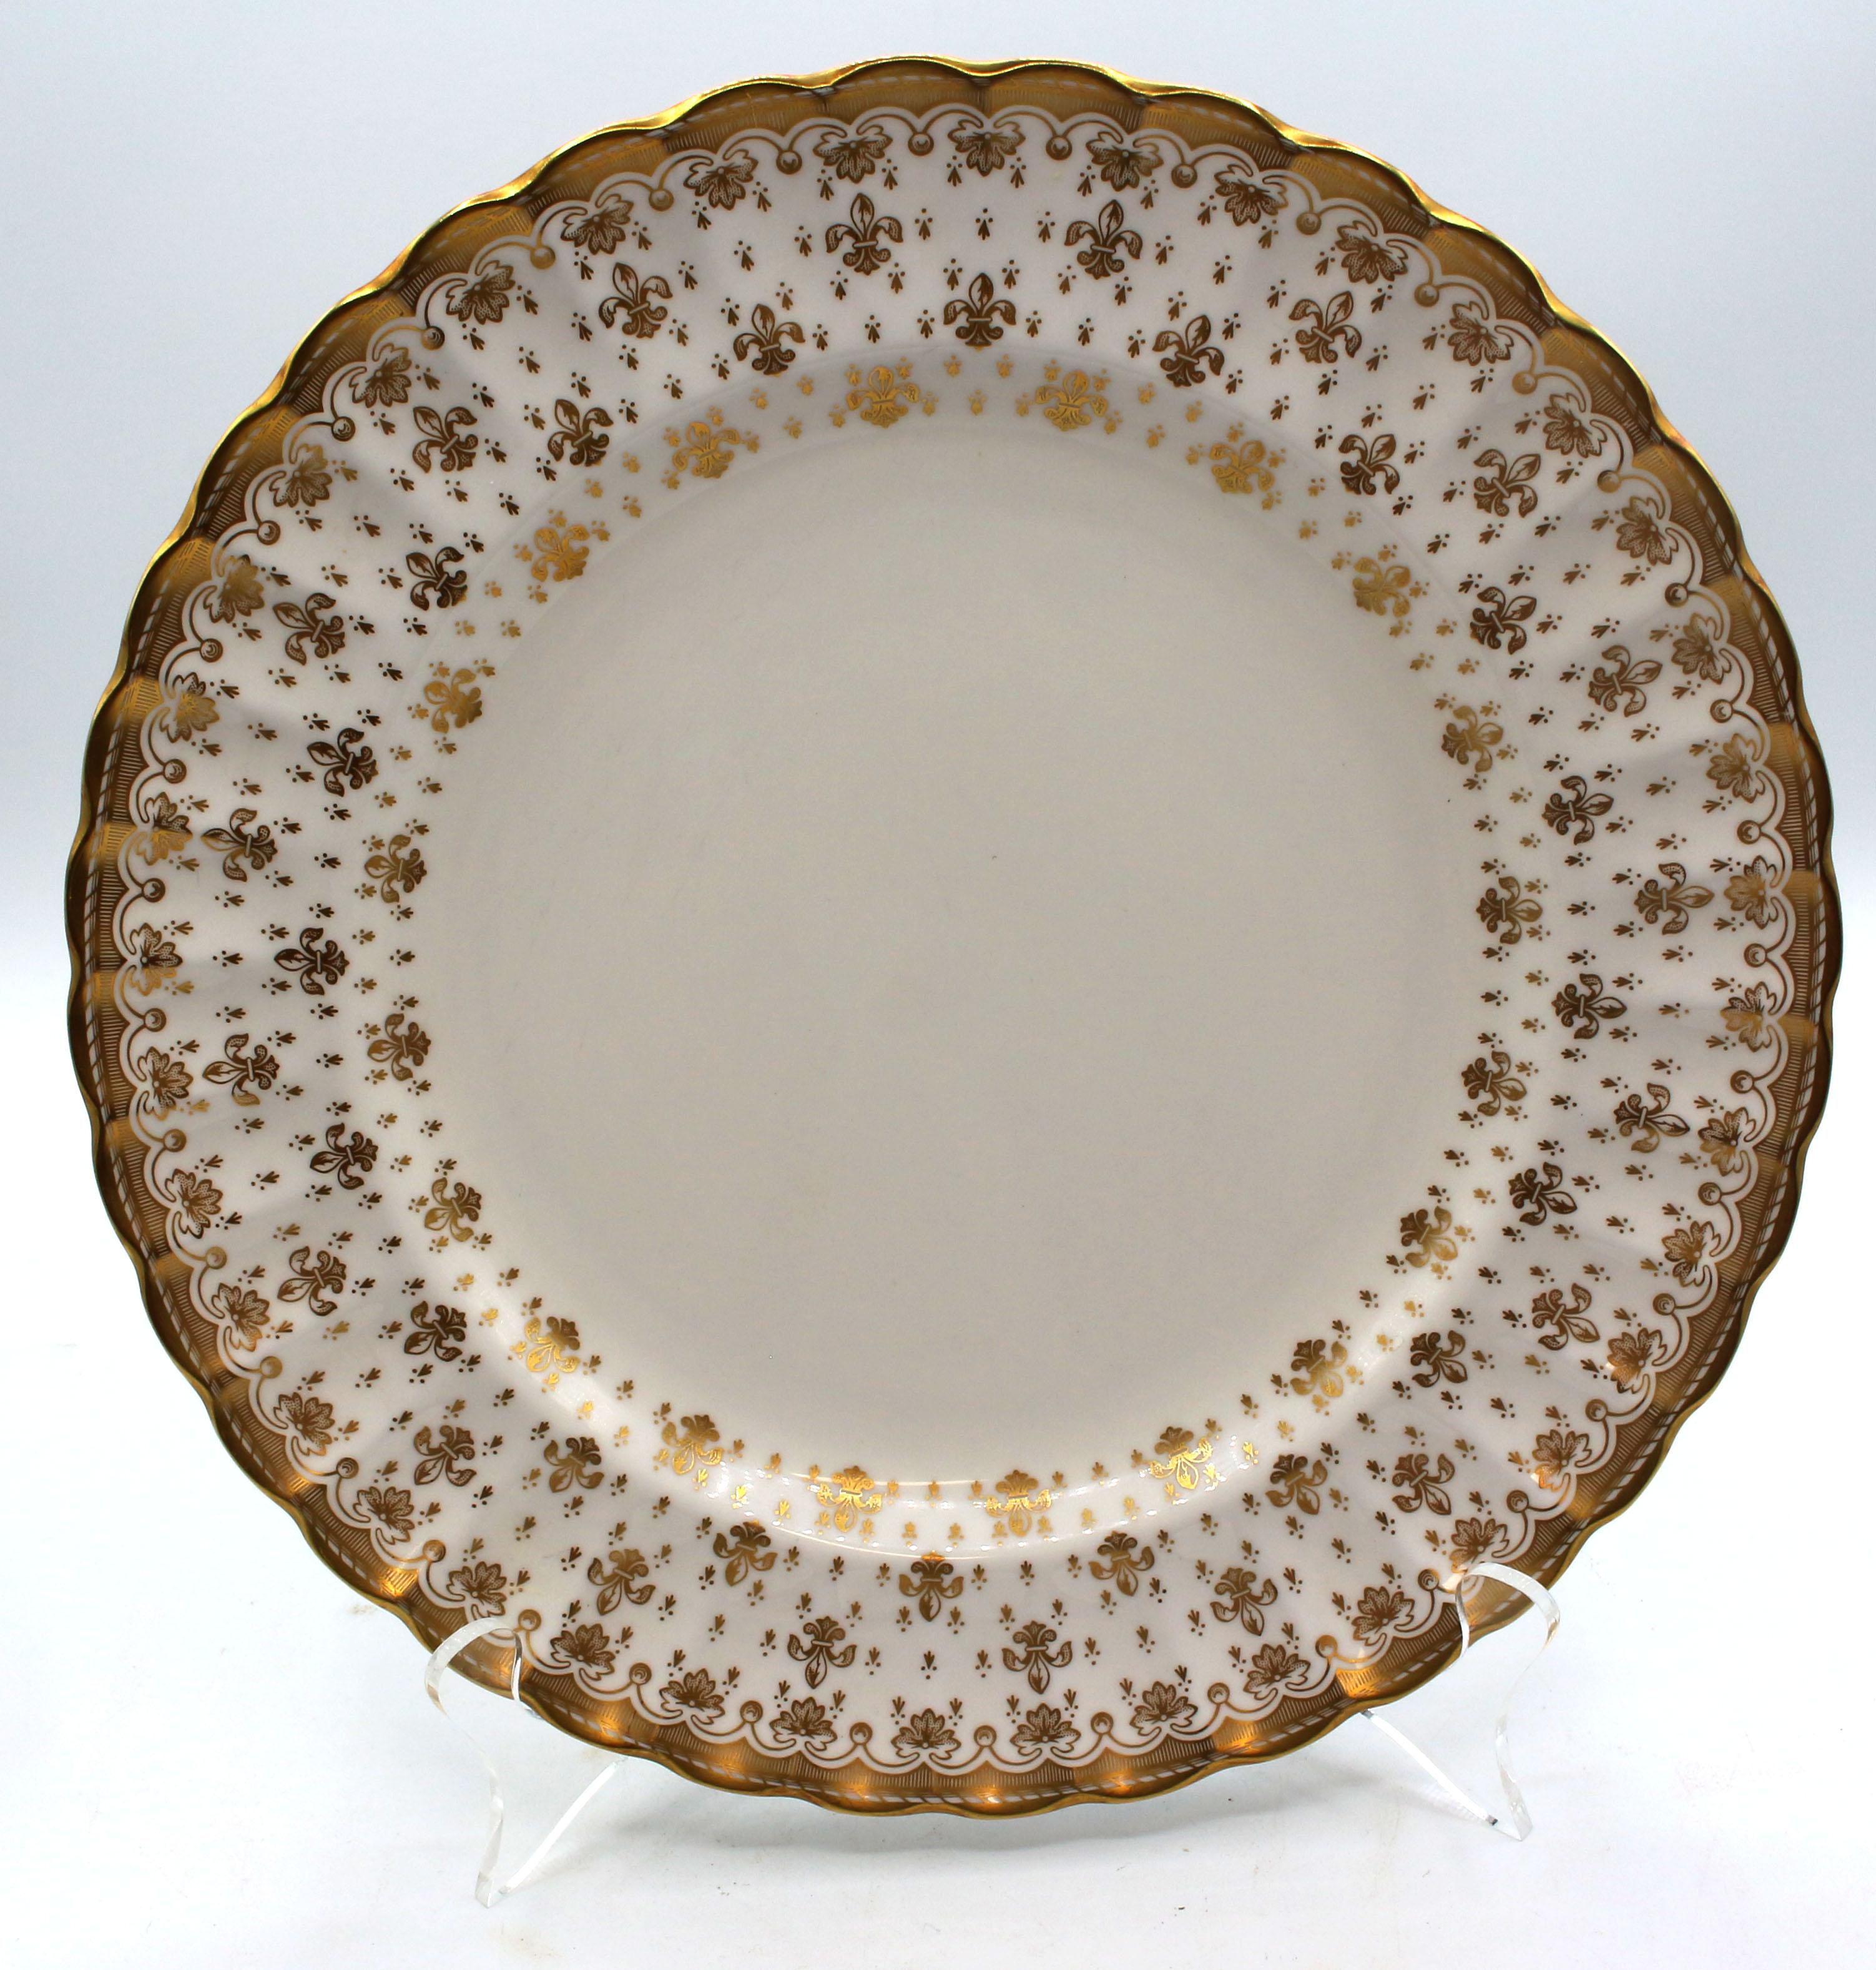 Set of 6 Dinner Plates, Spode's Fleur de Lys Gold, Mid-20th Century, bone china. Fine gilt decoration. Discontinued pattern. Fine condition.
10 3/4